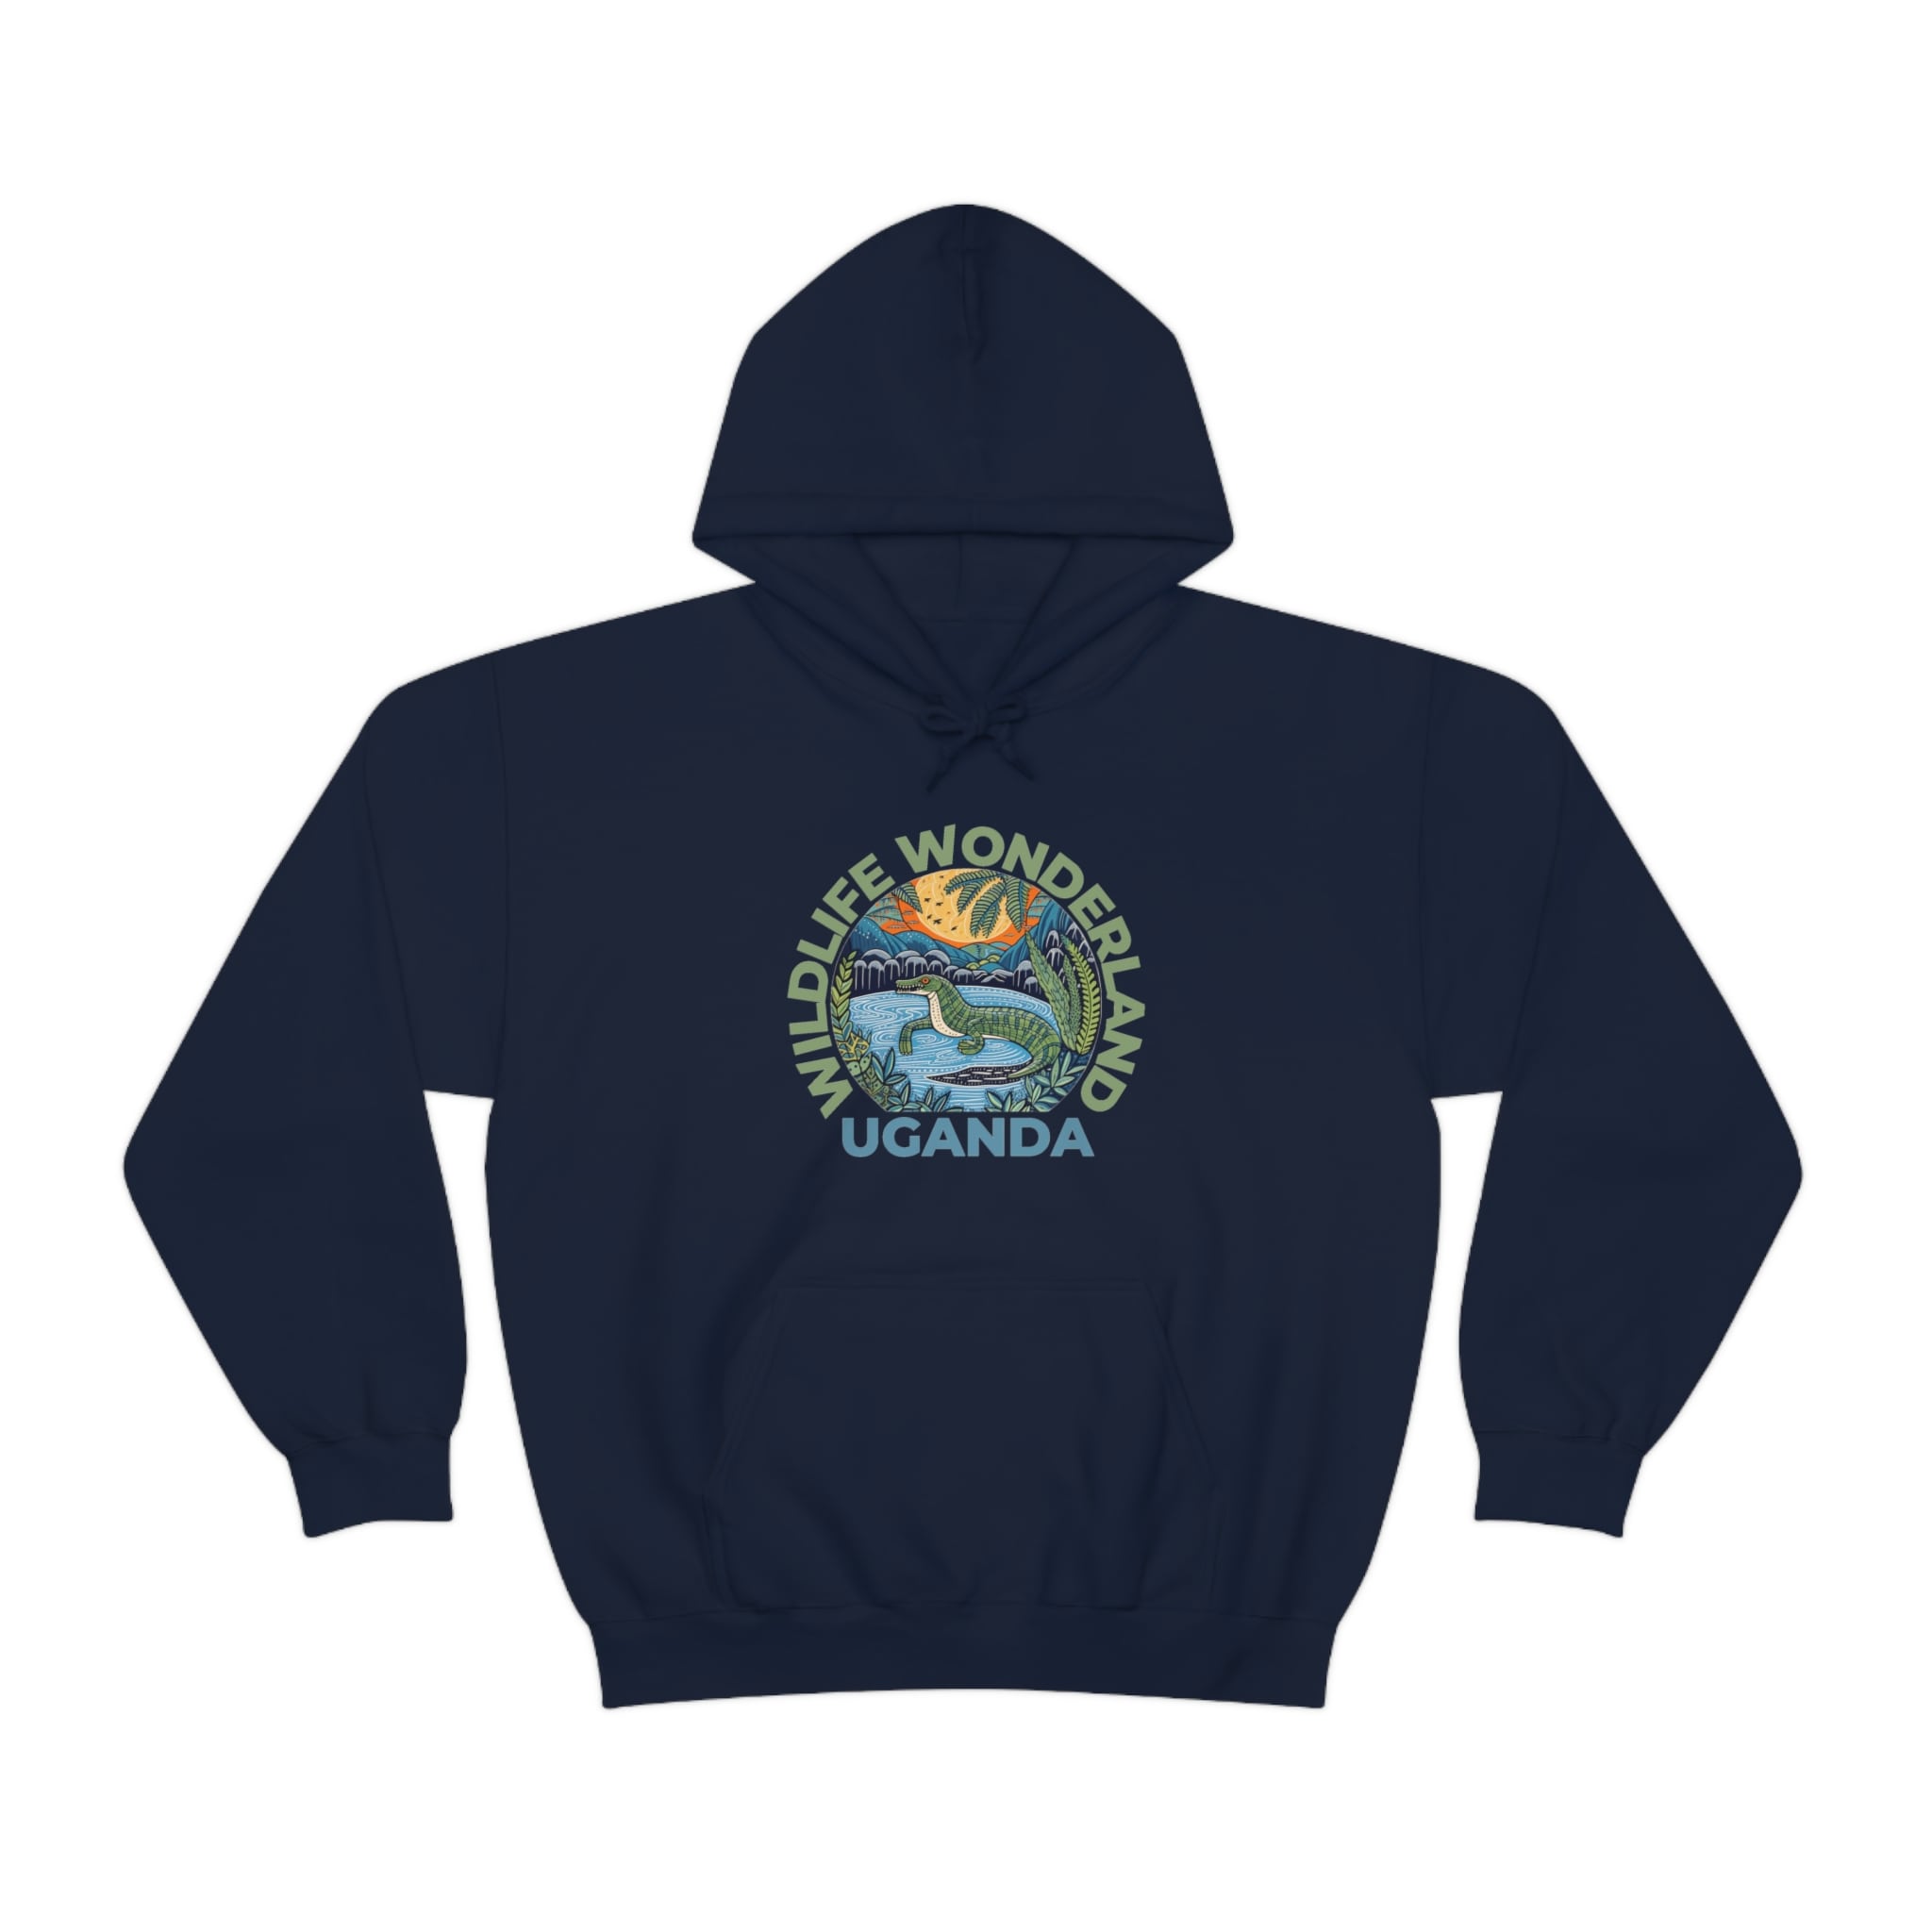 Navy blue hoodie featuring the design of Uganda's wildlife wonderland.